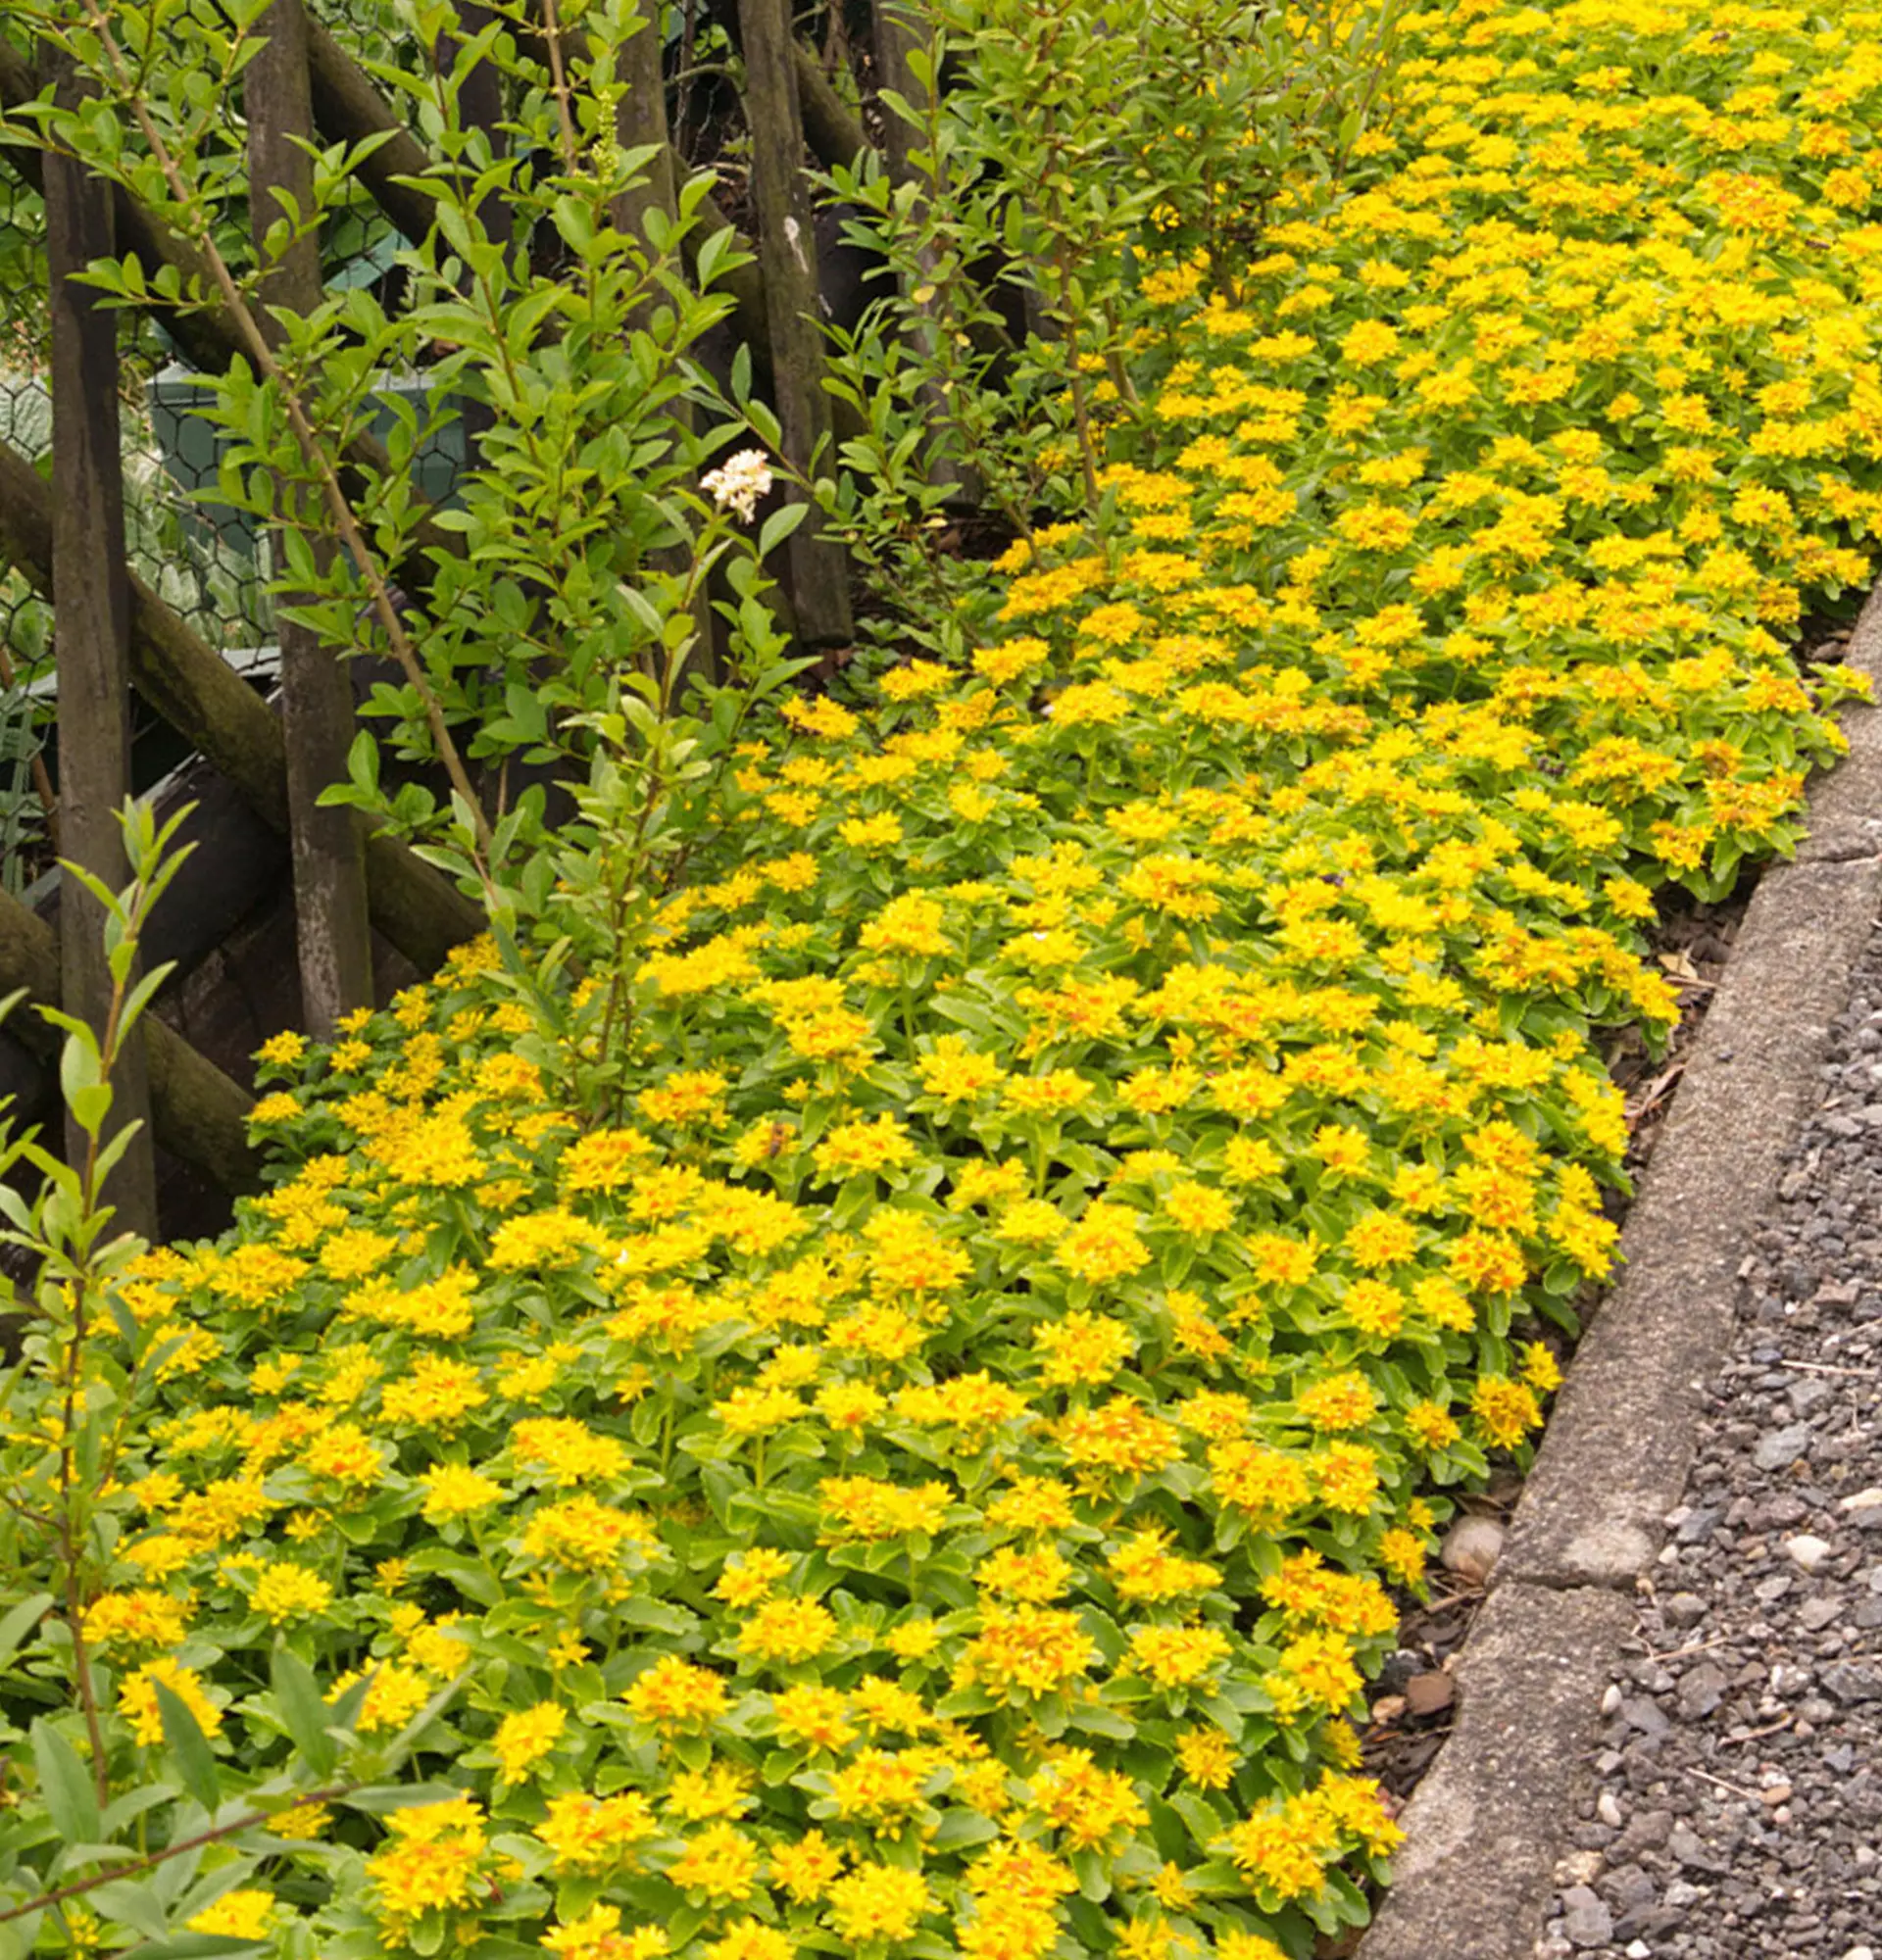 Stonecrop yellow photo - hernia grass